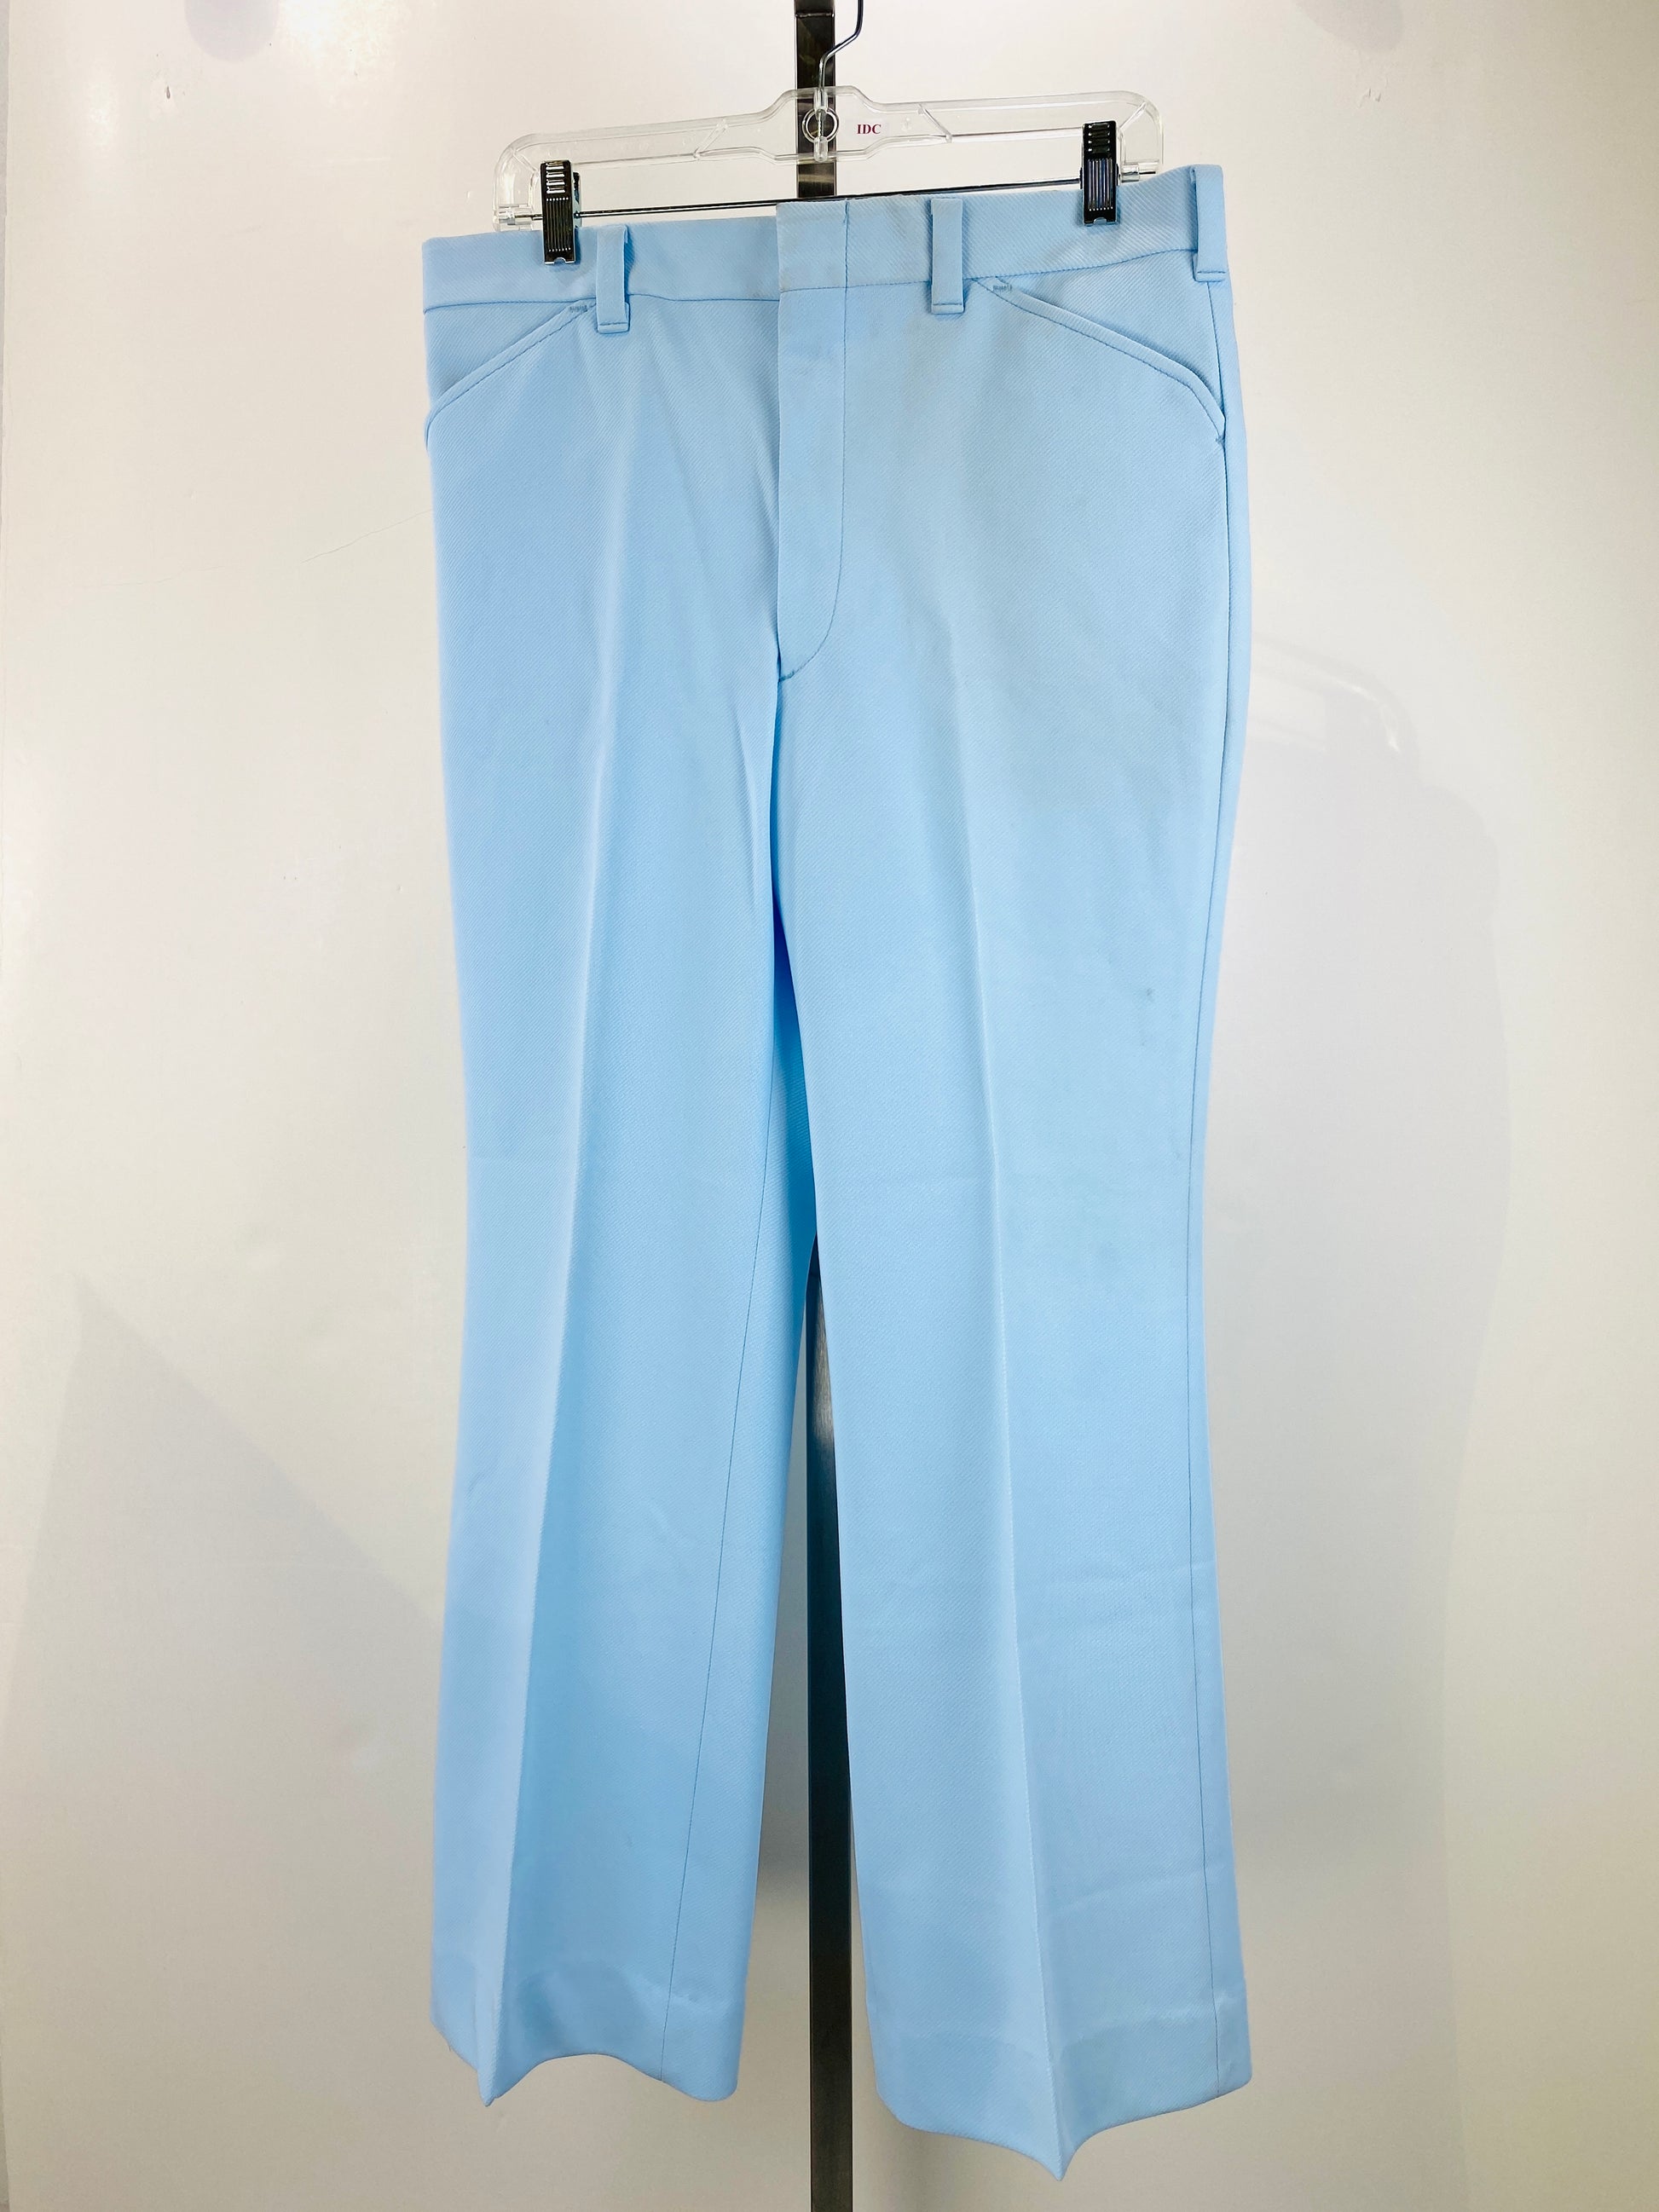 Vintage 1970s Deadstock Lee Polyester Flared Trousers, Men's Blue Slacks, NOS